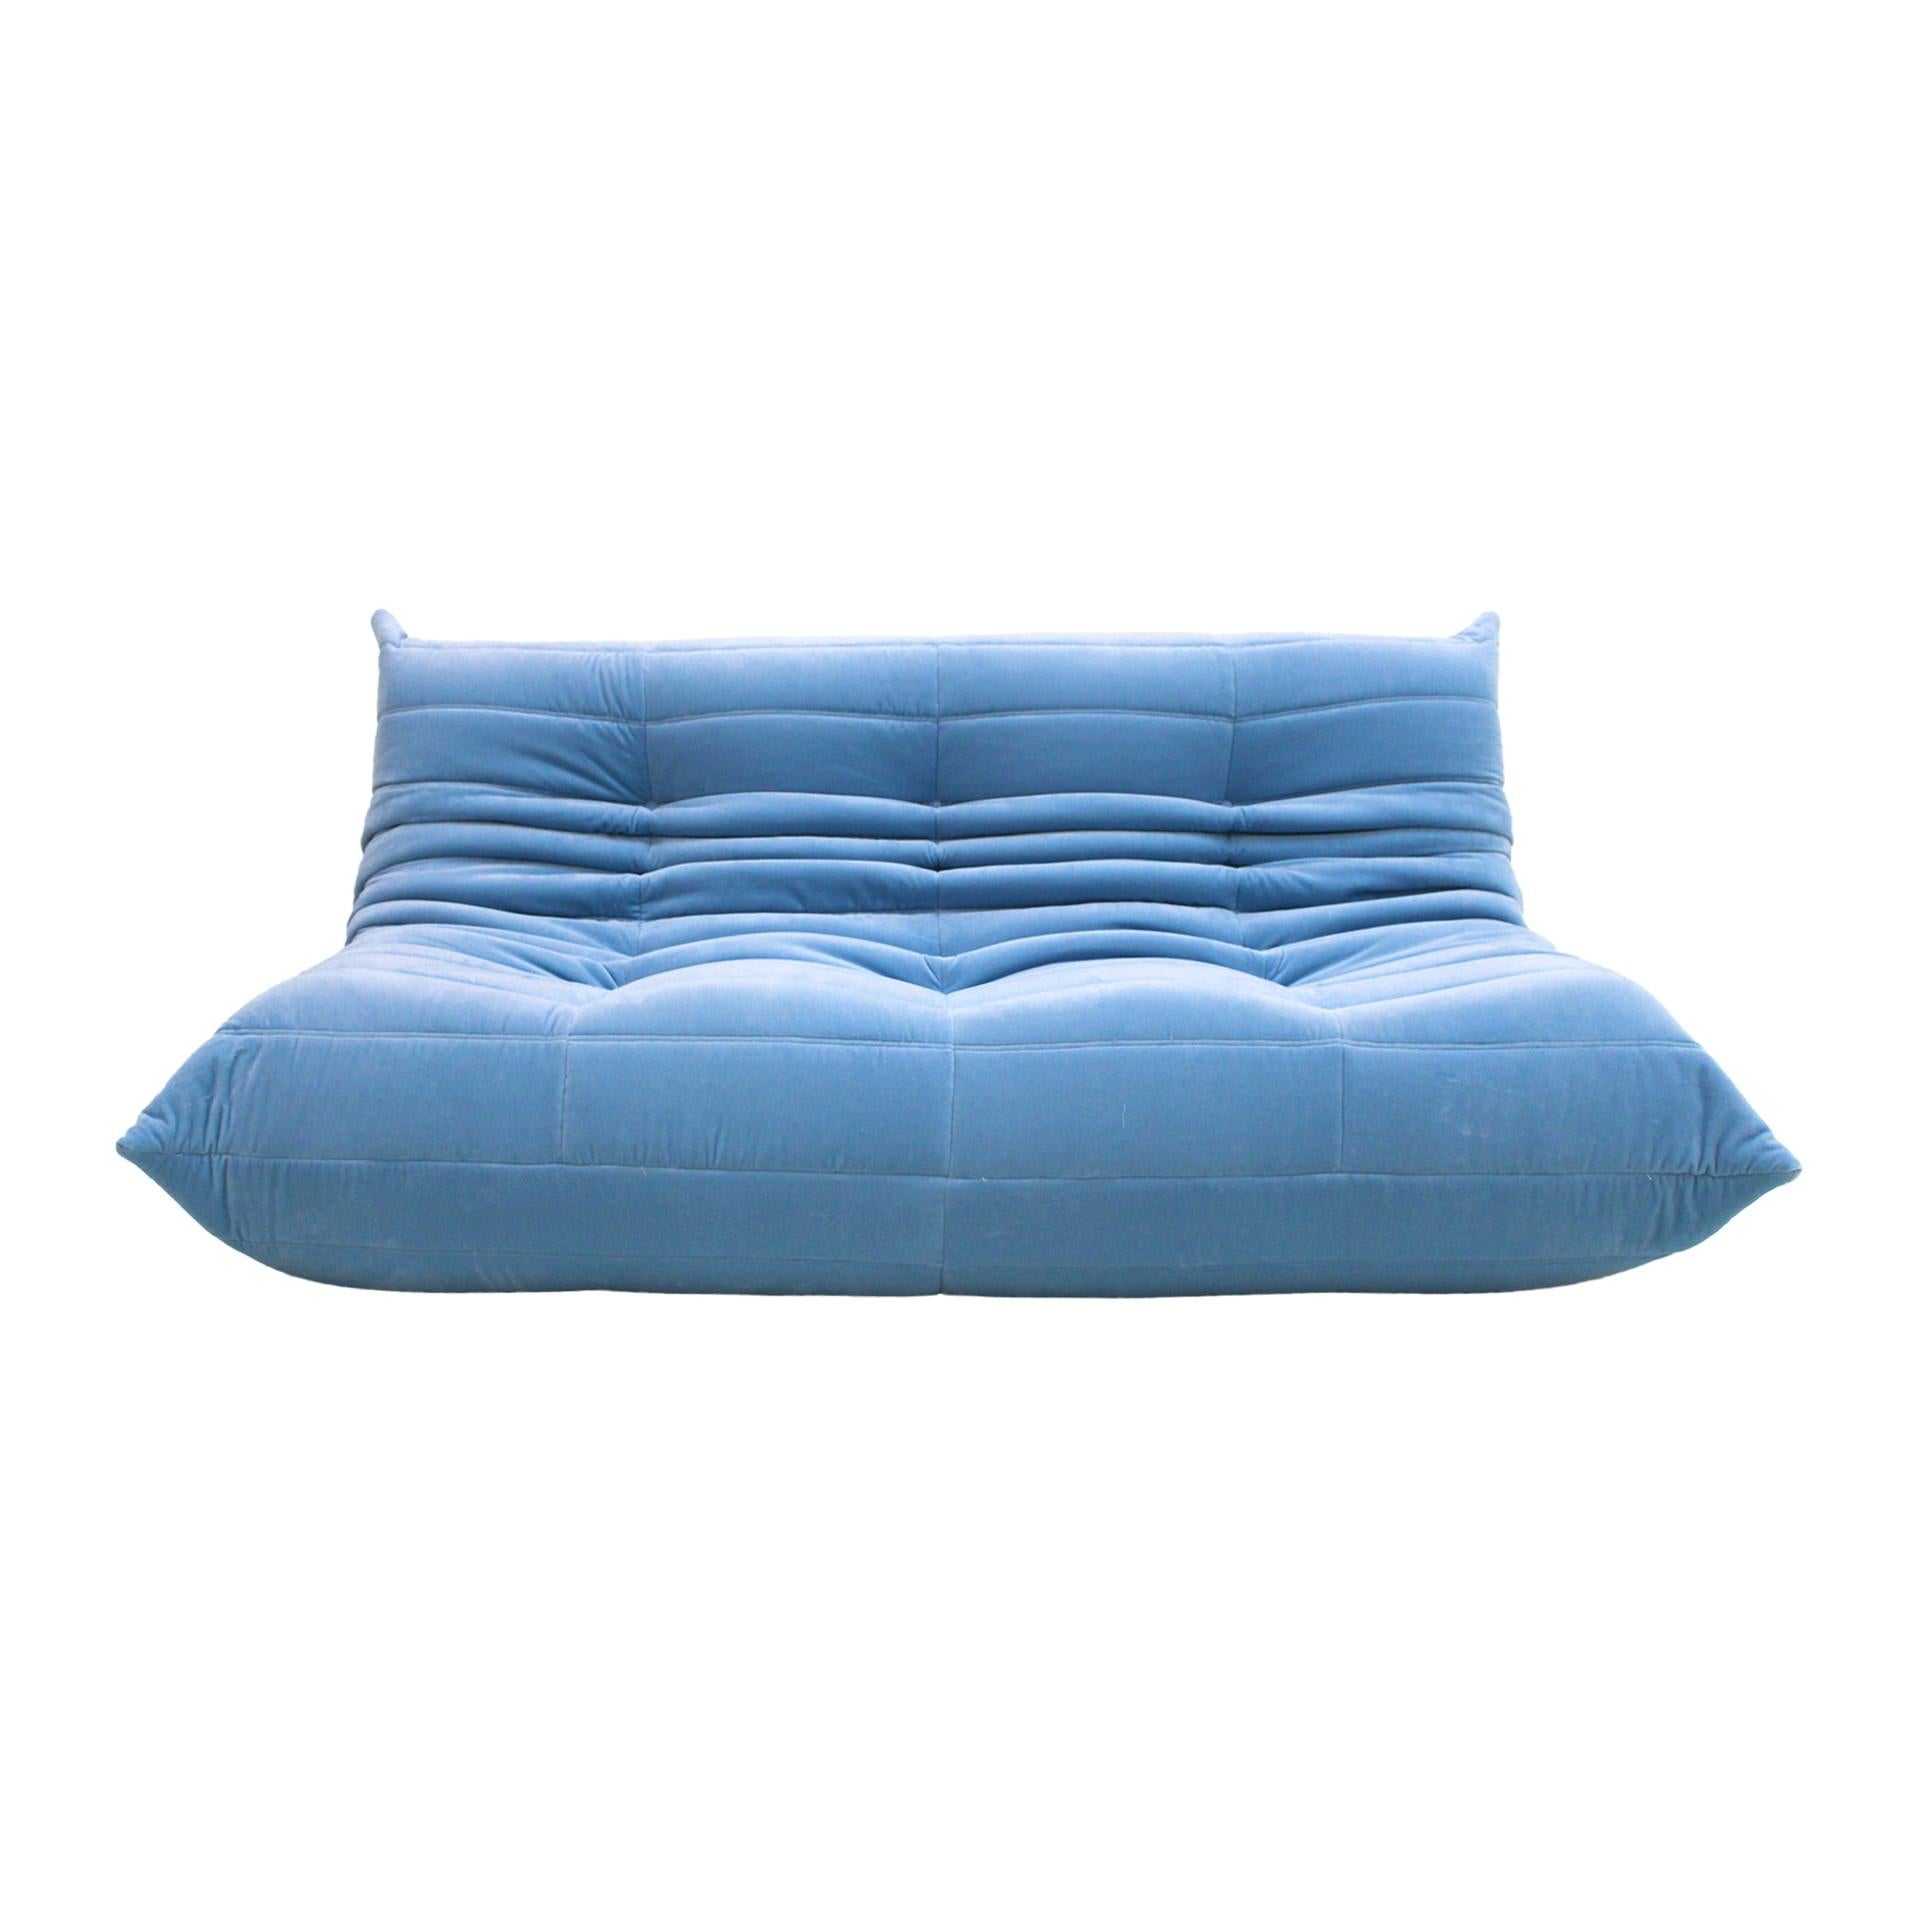 Late 20th Century Original Ligne Roset Togo Blue Cotton Velvet Sofa Designed by Michel Ducaroy